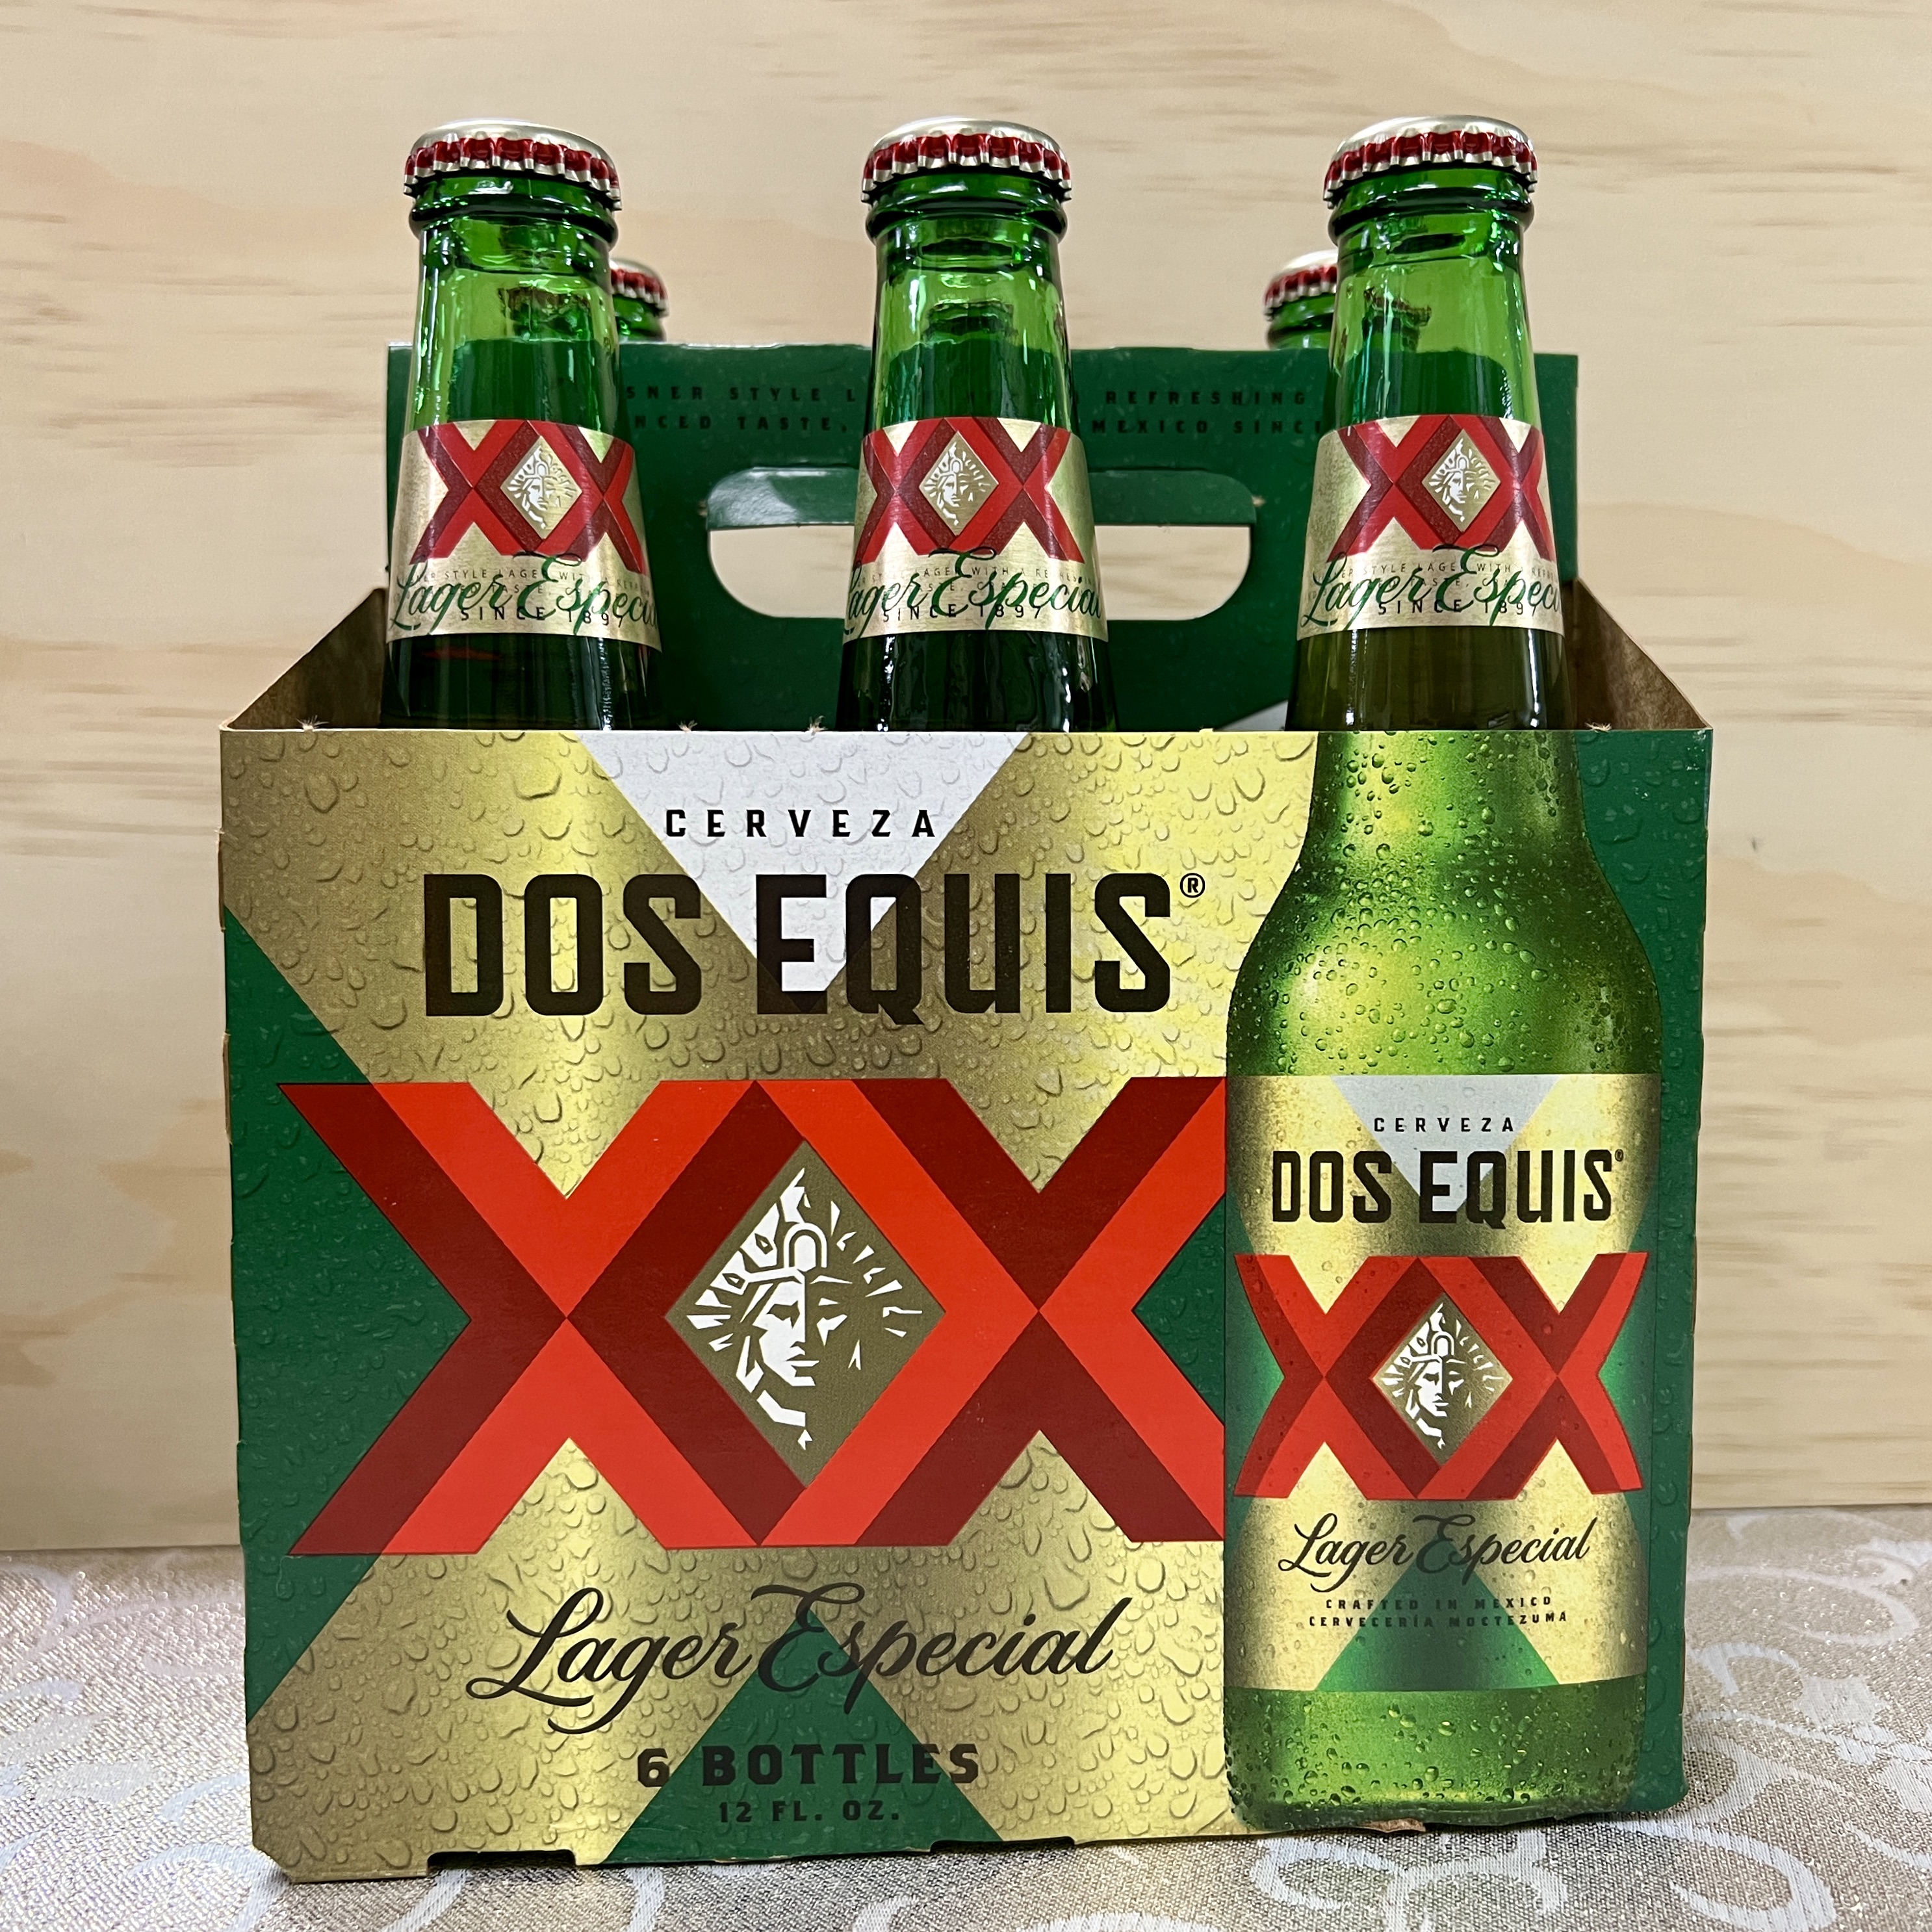 Dos Equis Lager Especial 6 x 12oz bottles